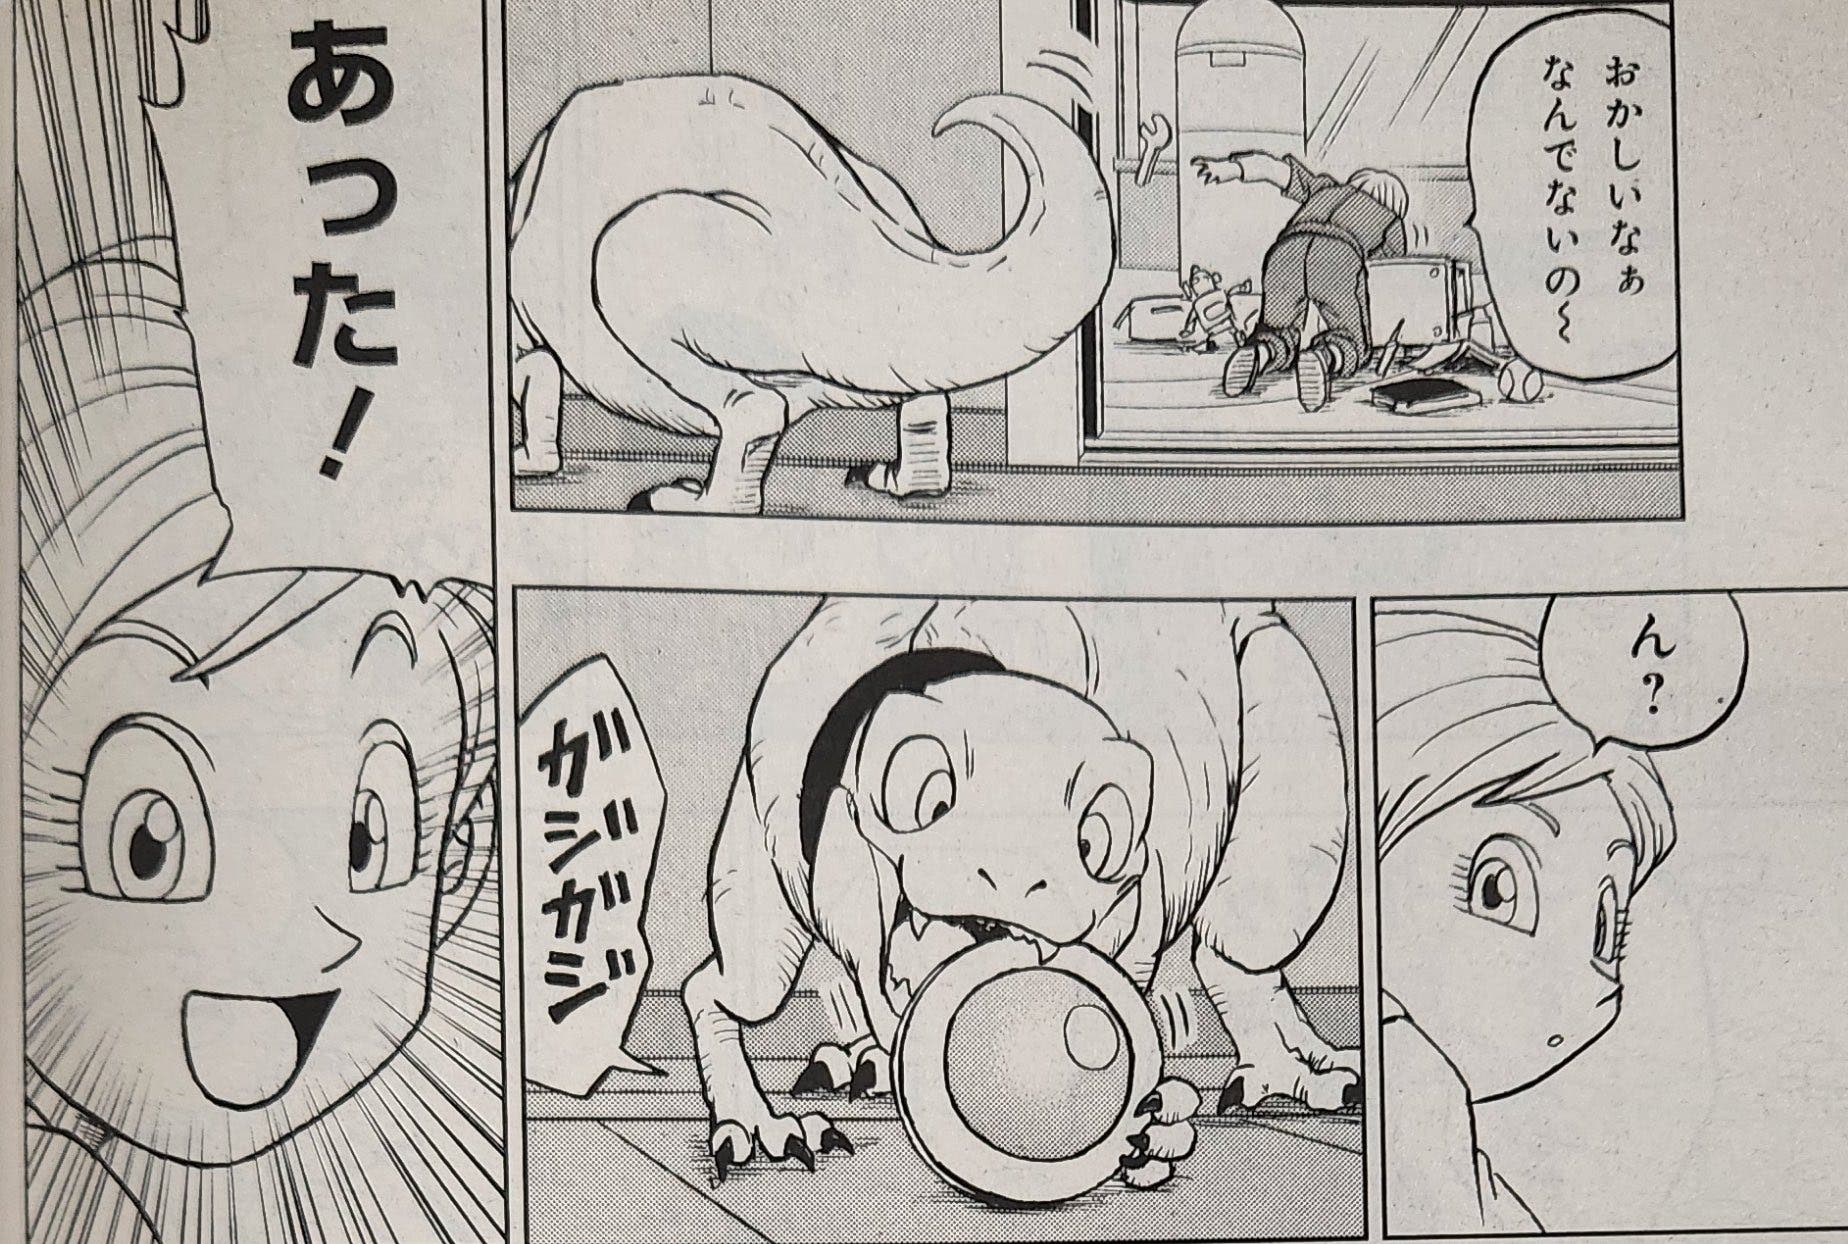 Daiko O Saiyajin on X: SAIU! Imagens do capítulo 92 do mangá de